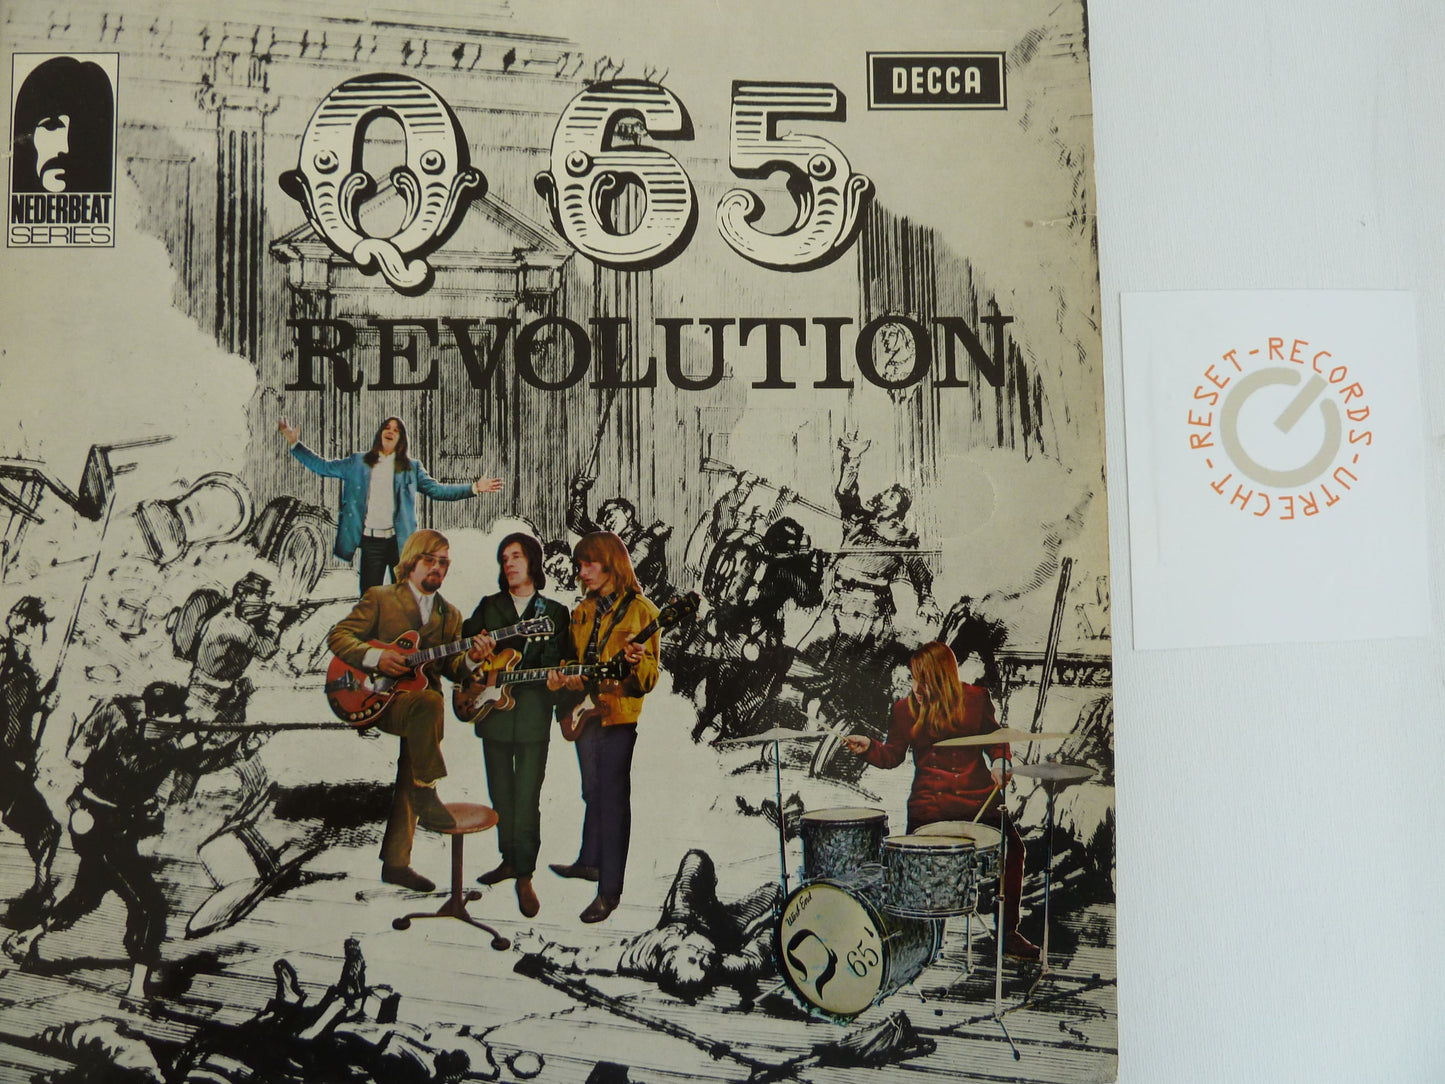 Revolution #2 inspired by Q65 – Revolution